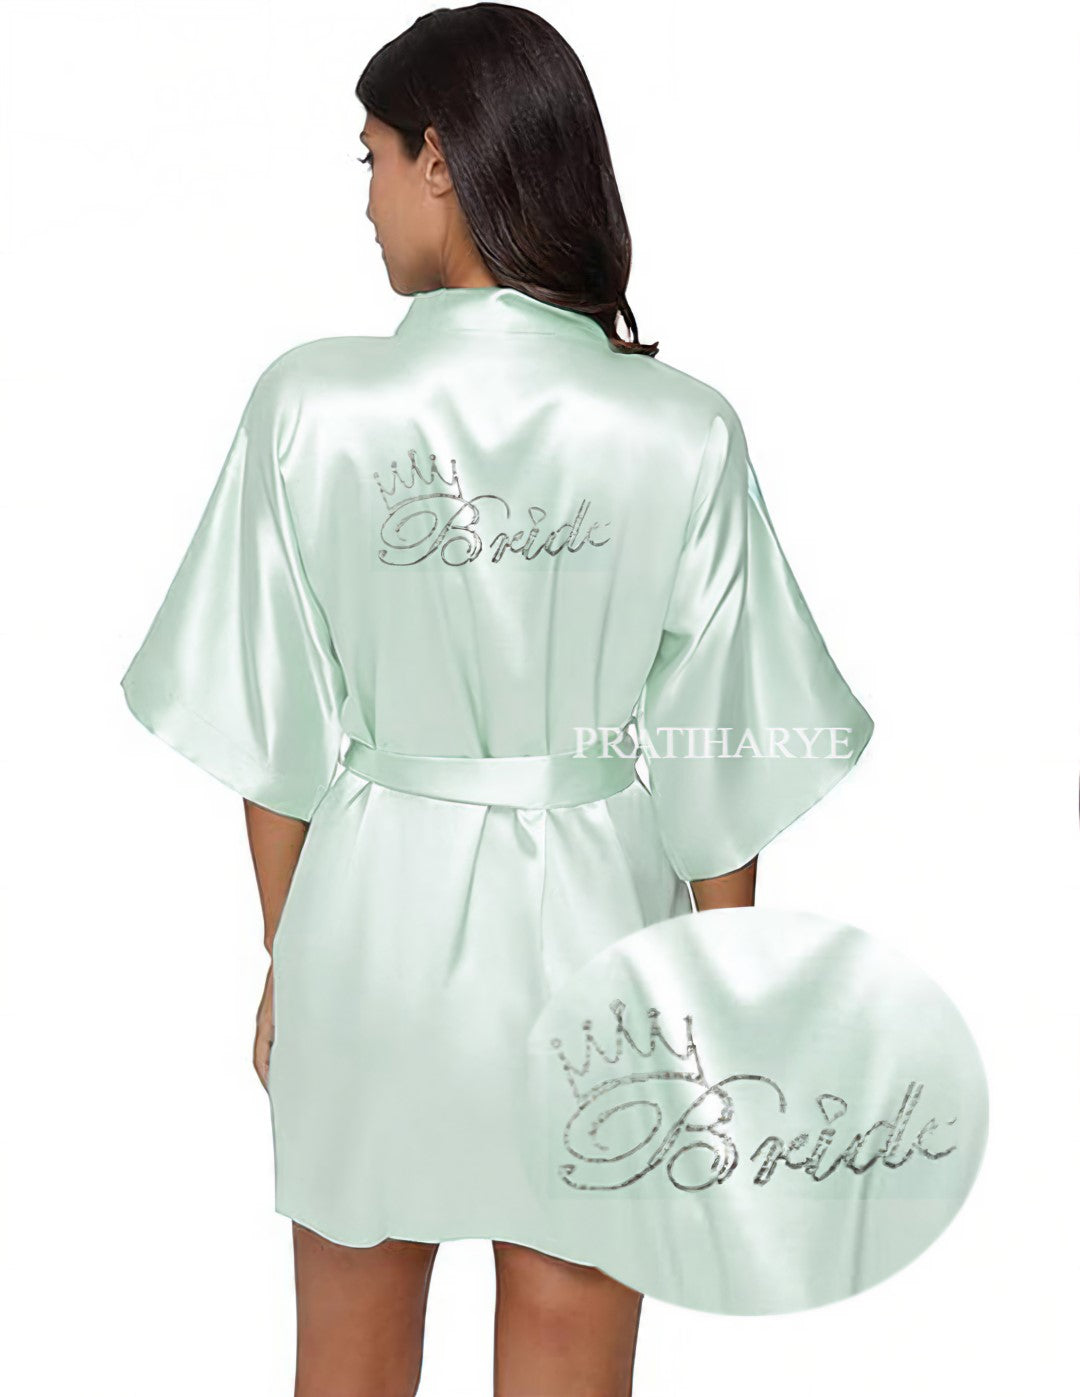 Pratiharye Rhinestone and Plain Robe for Bride and Bridesmaid - Satin Robe - Bride Robe for Wedding - Robe Bridesmaid - Bachelorett - Plain & Printed